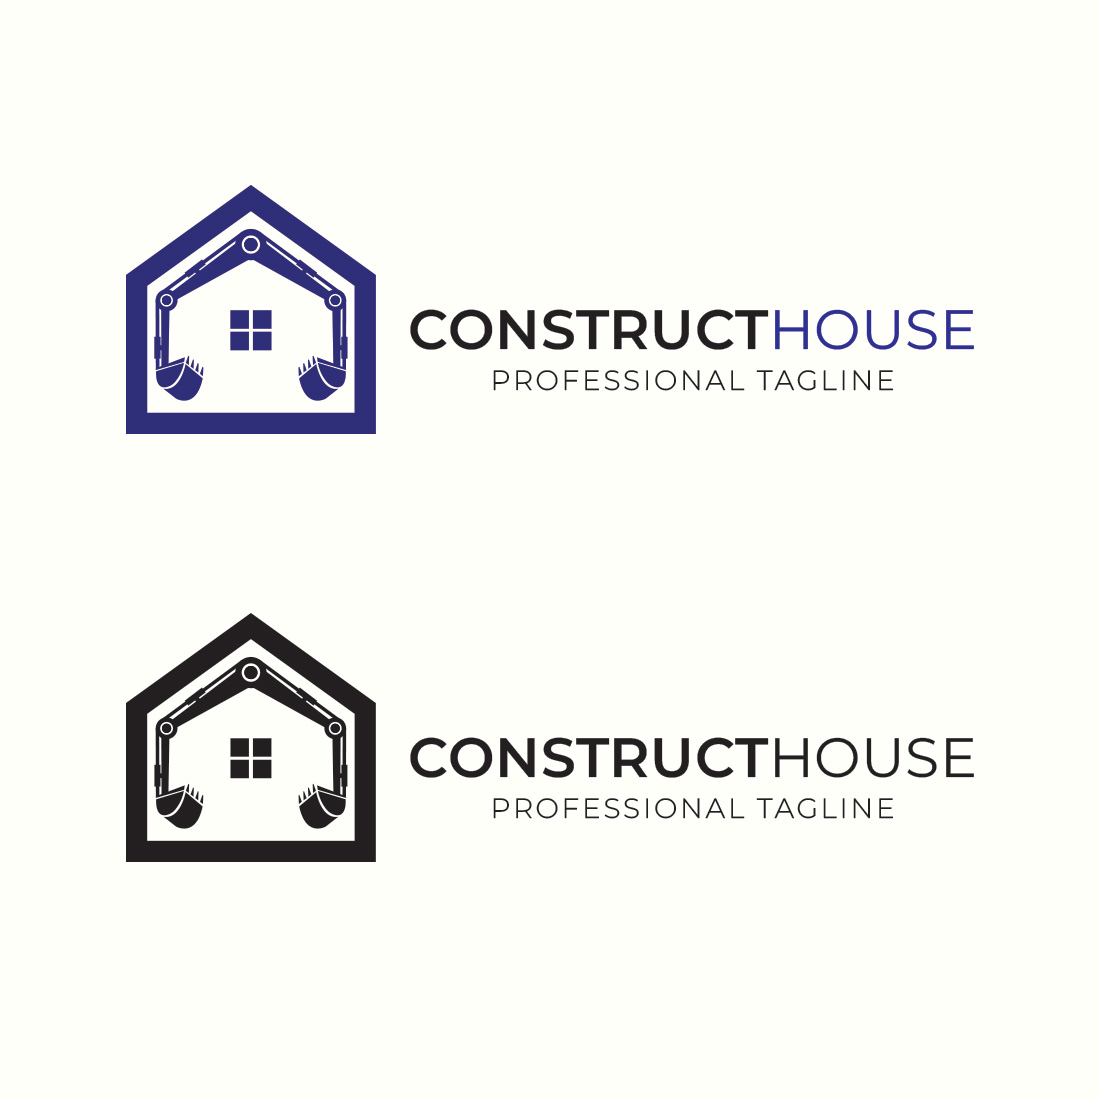 Constructor House Logo Design cover image.